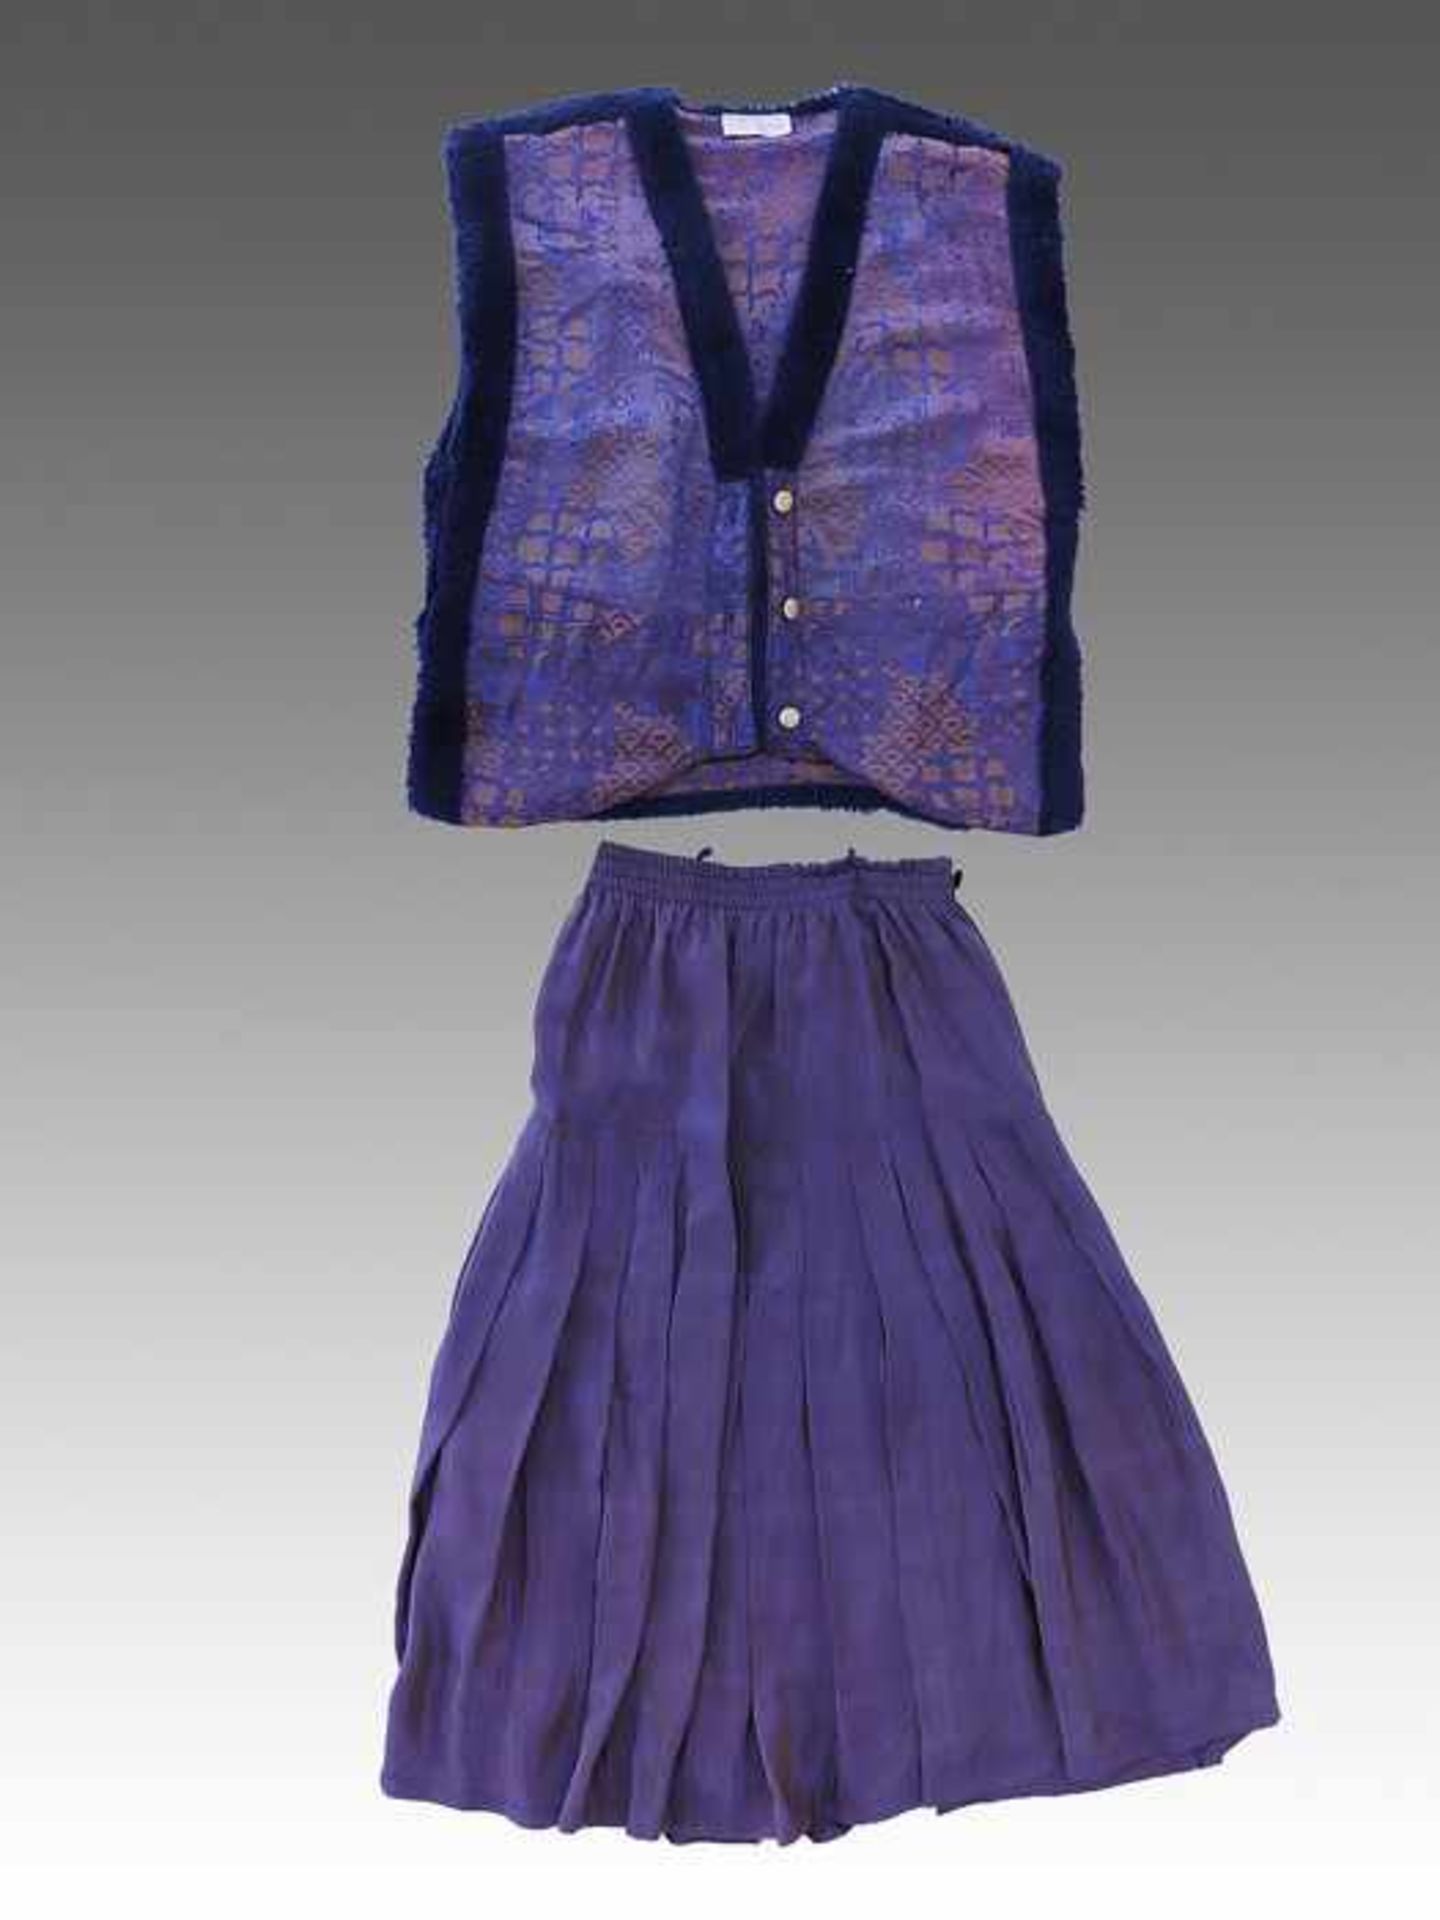 Tiffany exclusiv - Kostüm1980er J., Vintage, 1 Rock, 1 Weste, 1 Blusenjacke, lila changierend, - Bild 4 aus 4